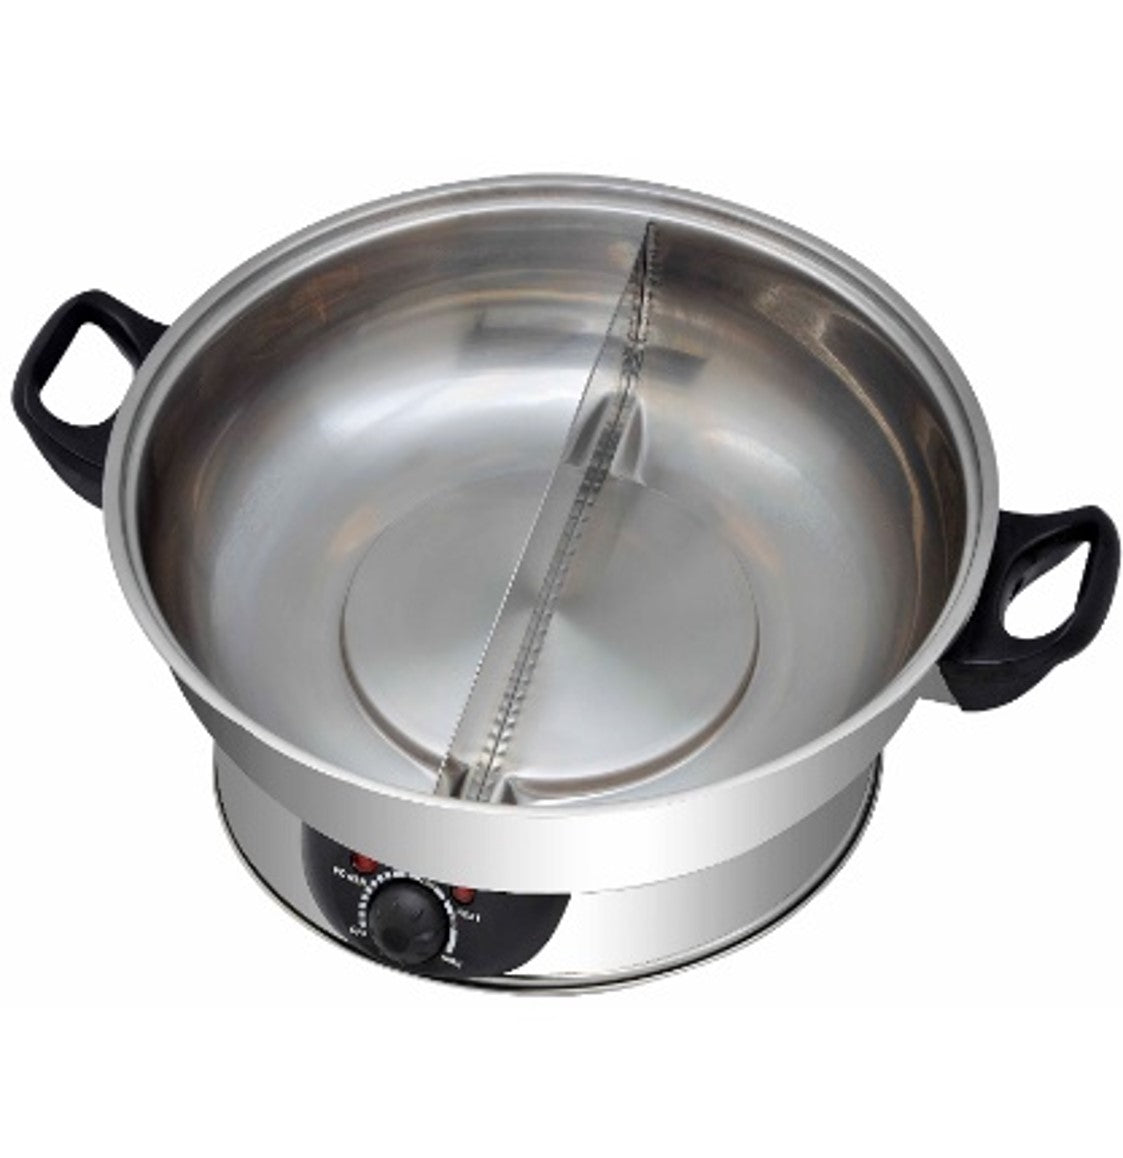 Austric Electric Shabu Shabu Hot Pot, 304 Stainless Steel Hot Pot with  Divider Electric pot with Tempered Glass Lid for Party, Family Gathering,5L  large capacitySilver Shabu Lift